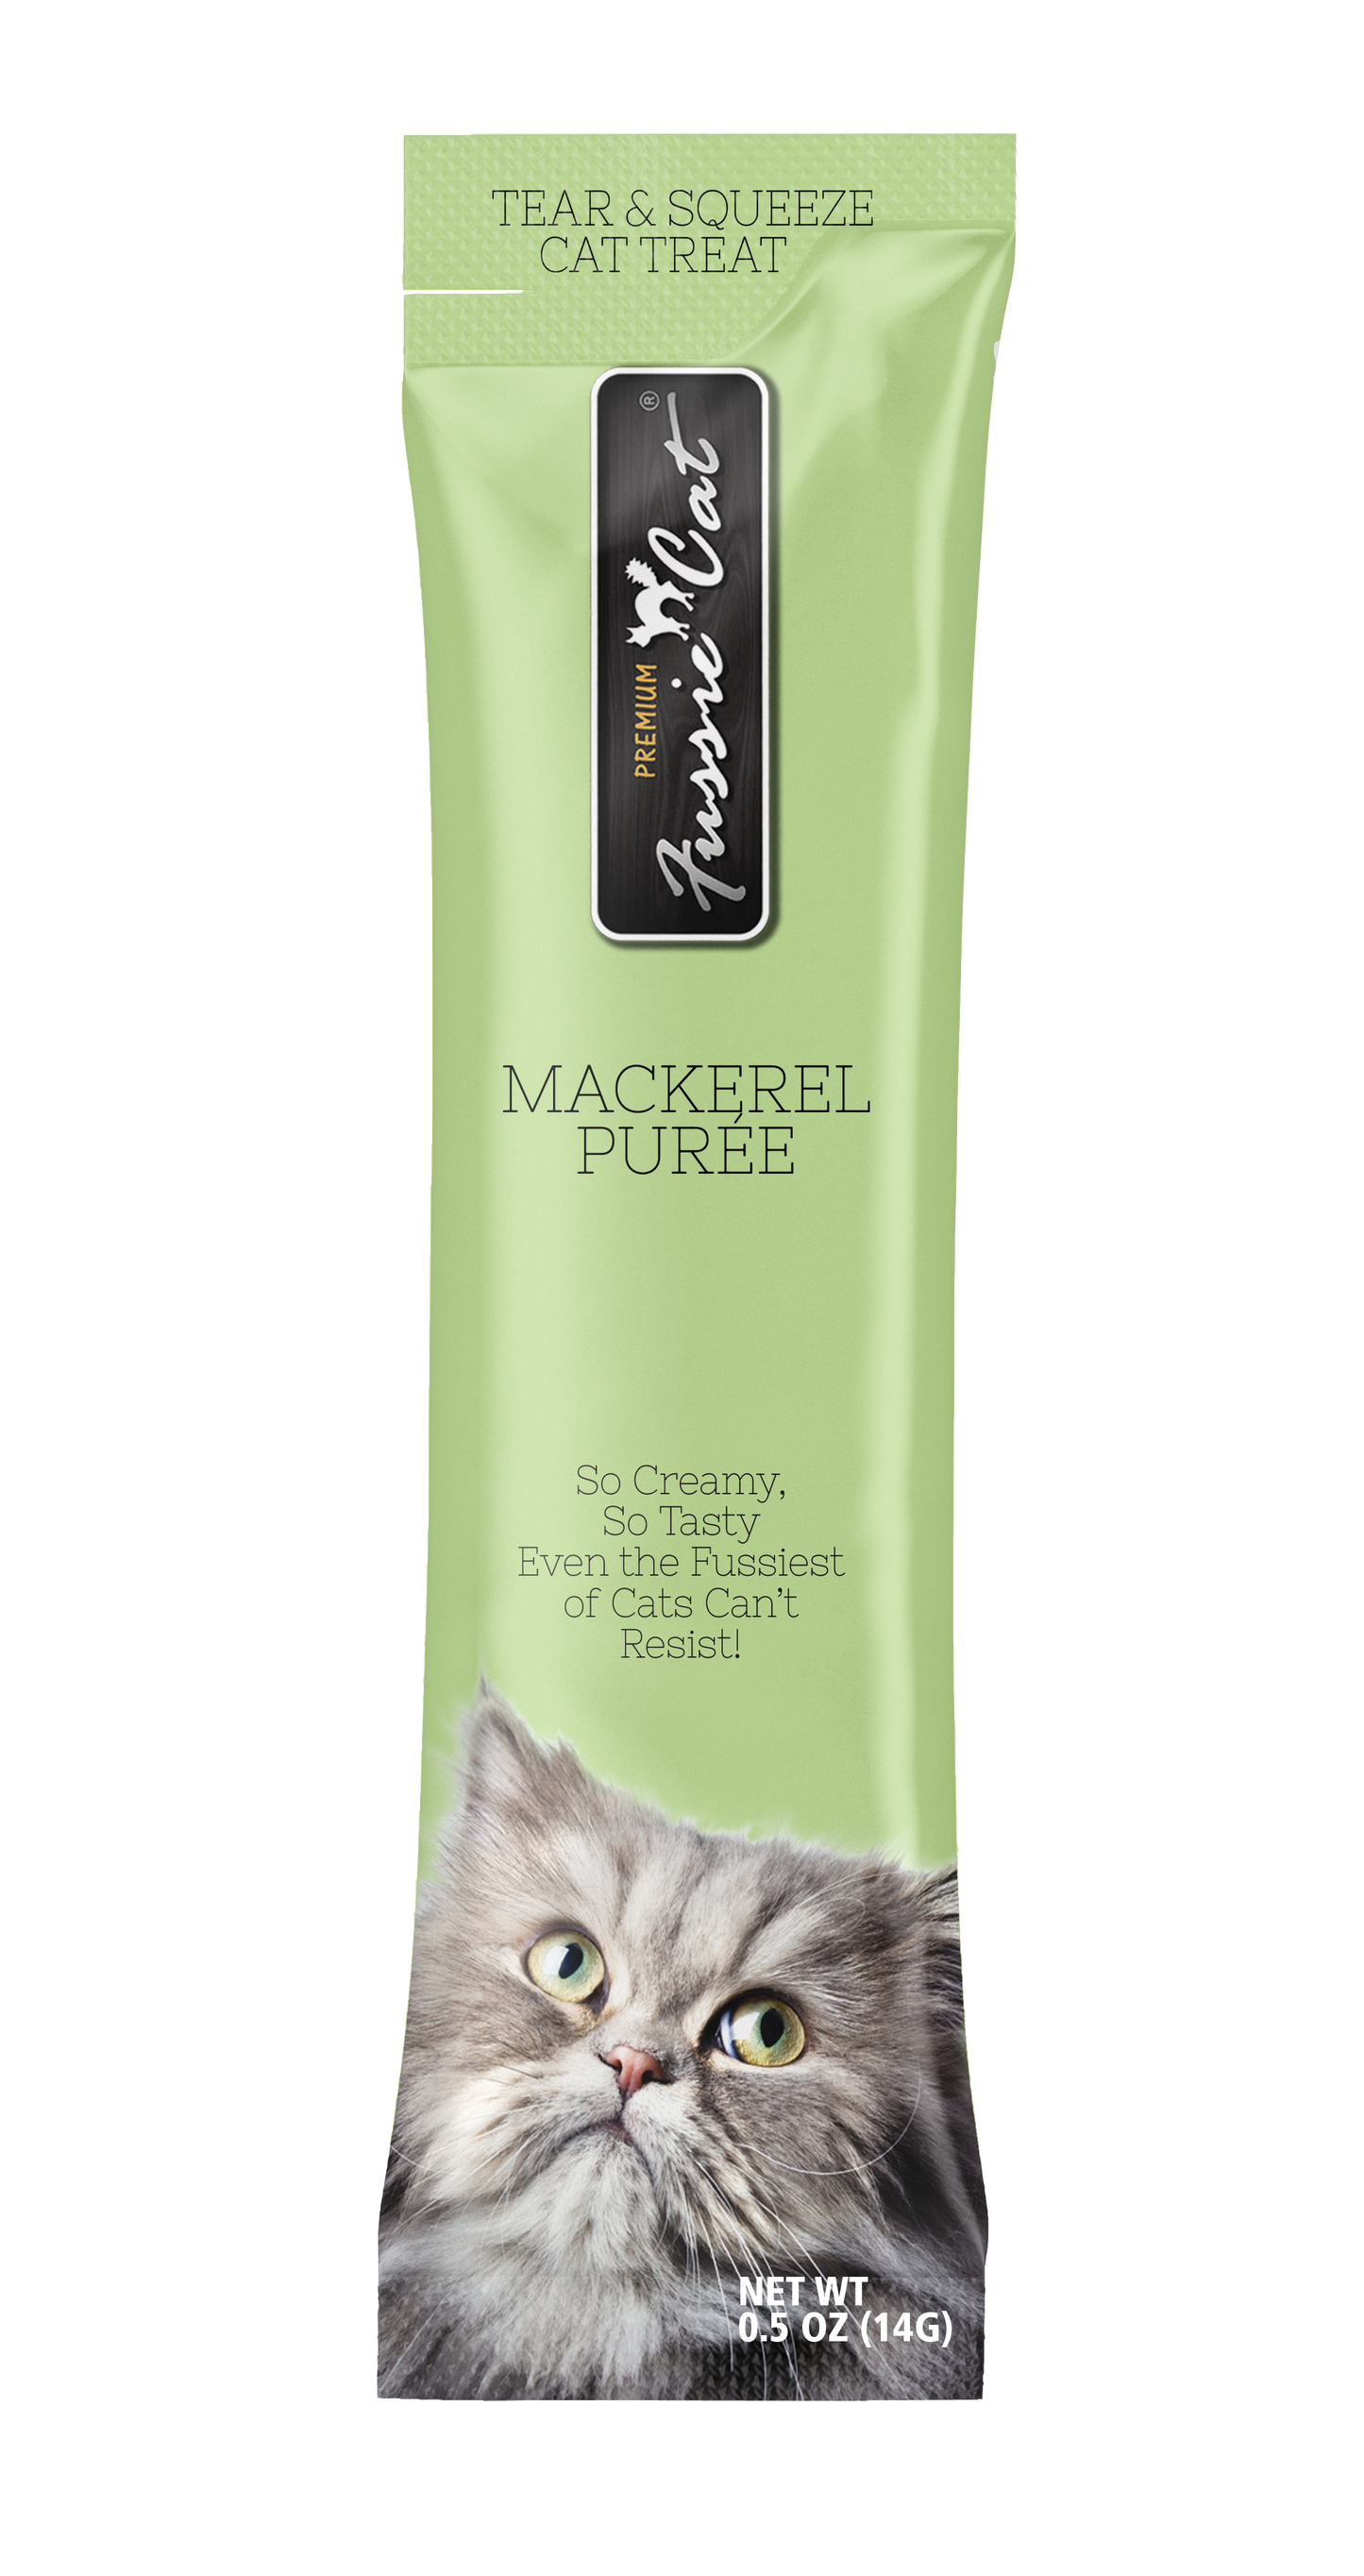 Fussie Cat Mackerel Purée 0.5-oz, 4-Pack, Cat Treat